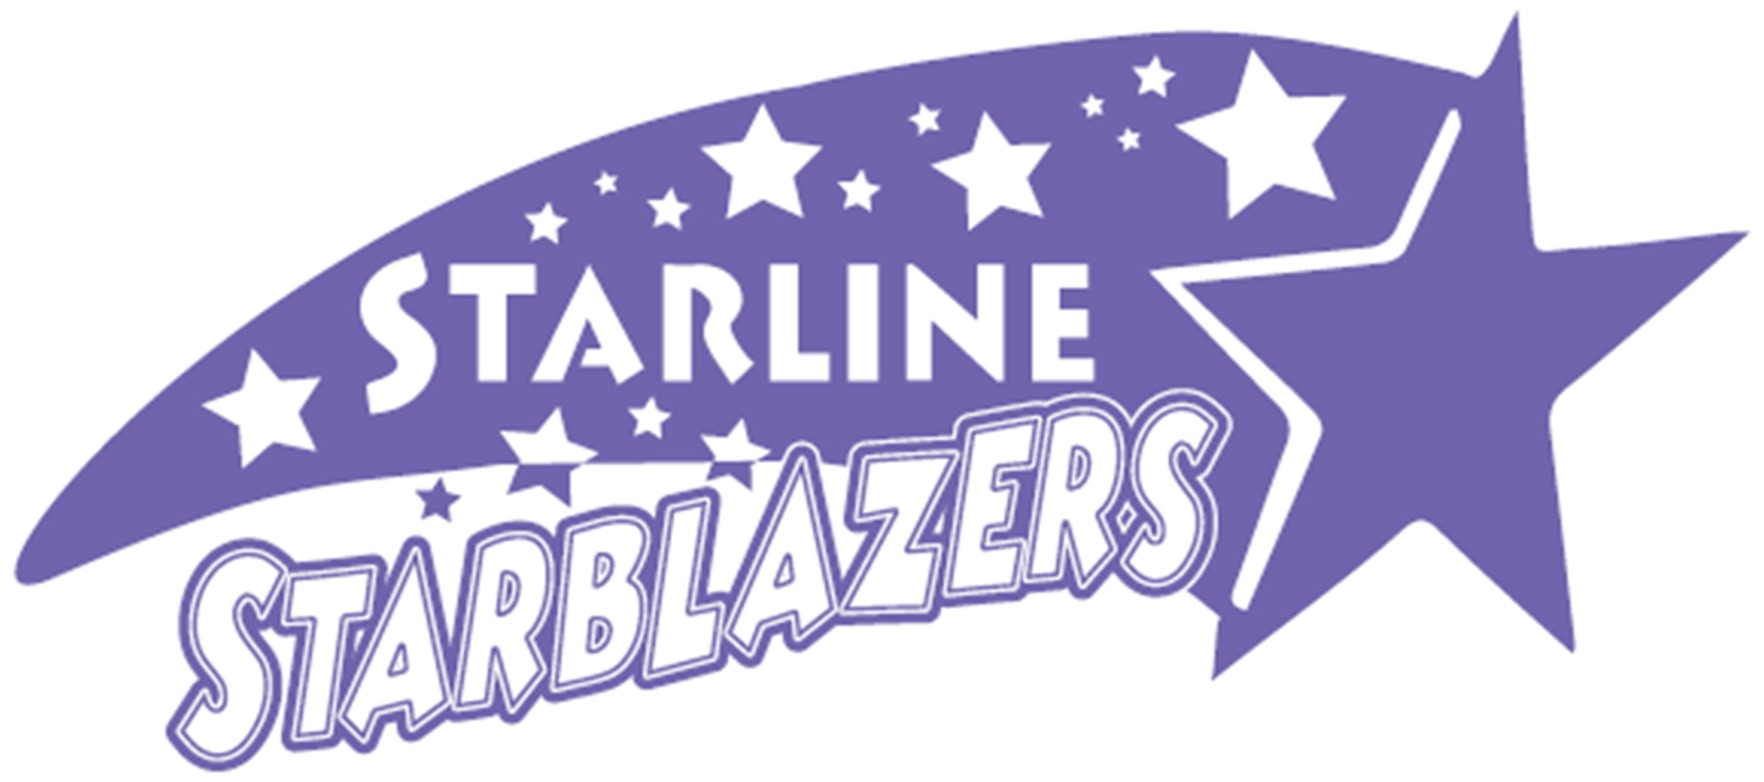 Starline Elementary logo - Starblazers shooting star logo